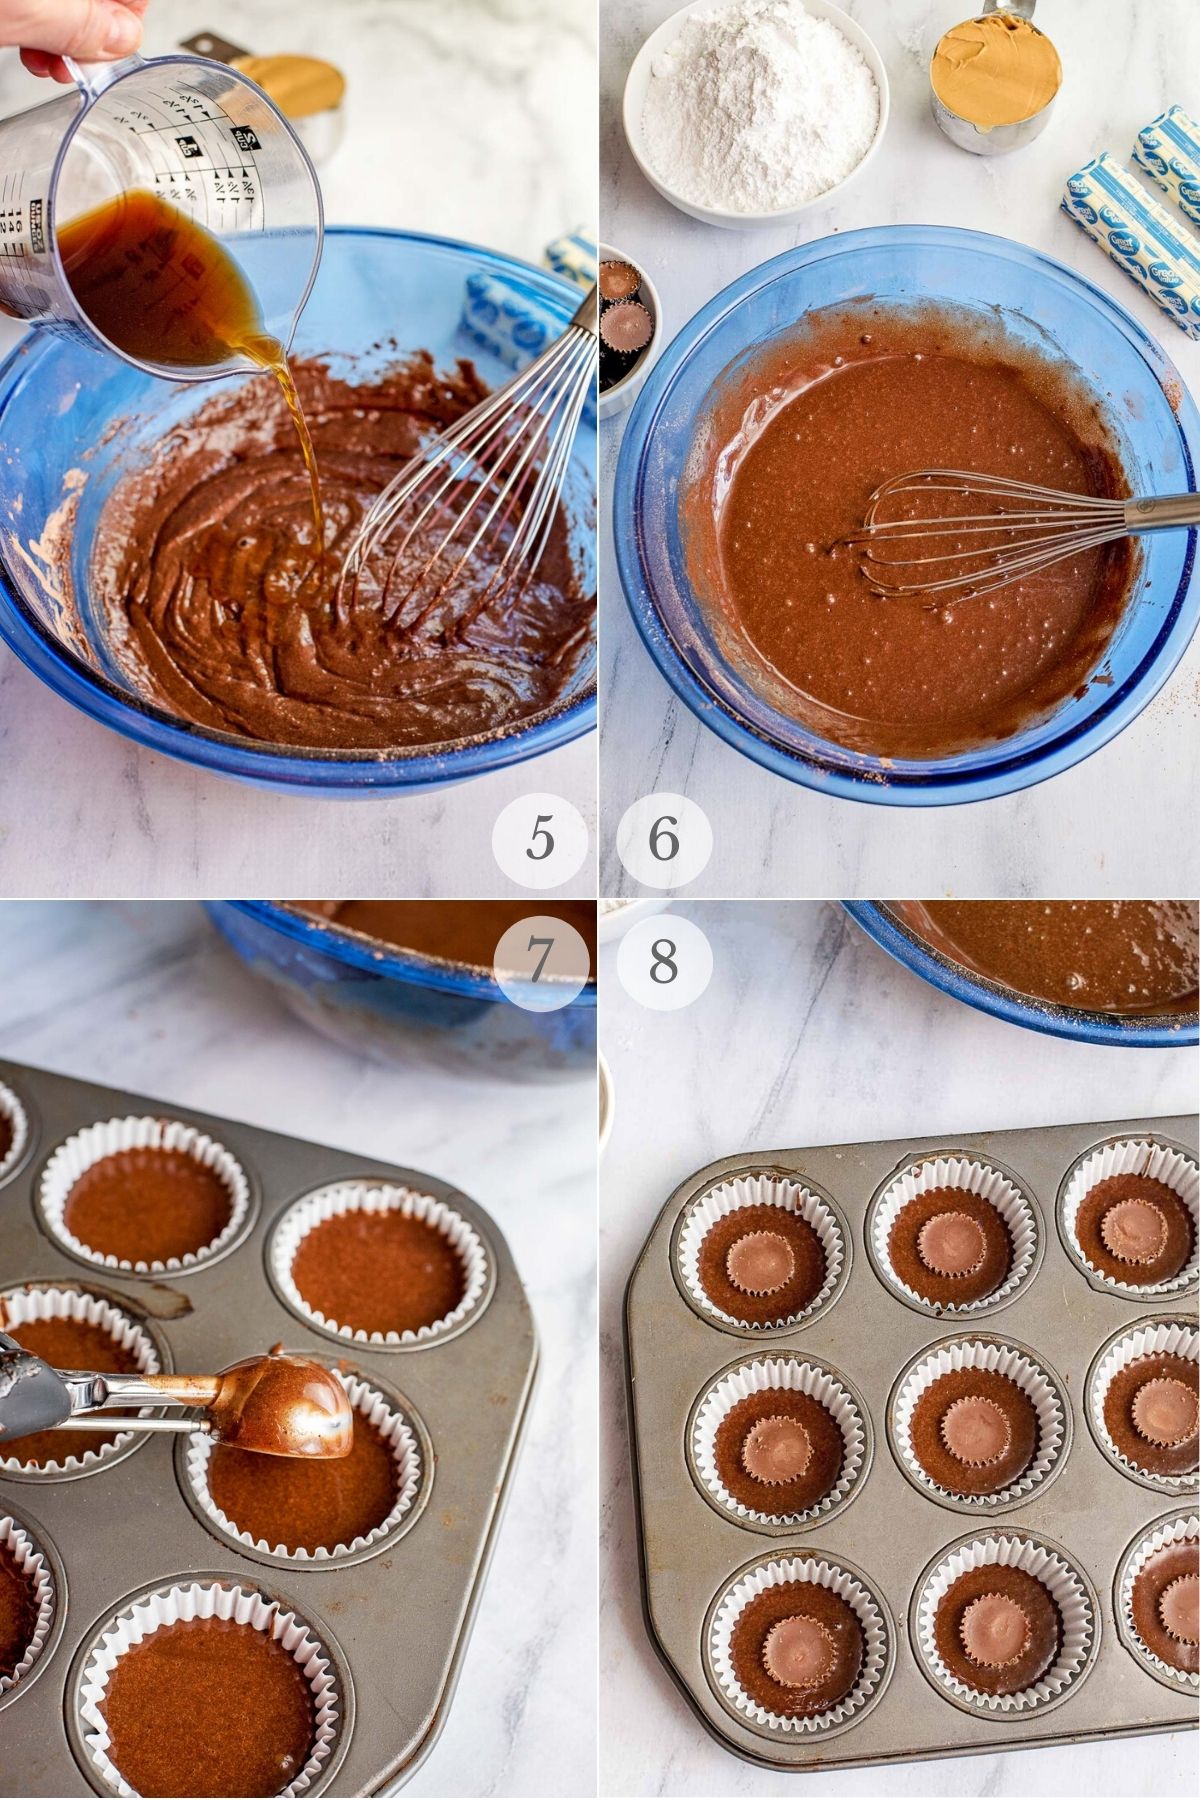 chocolate peanut butter cupcakes recipe steps 5-8